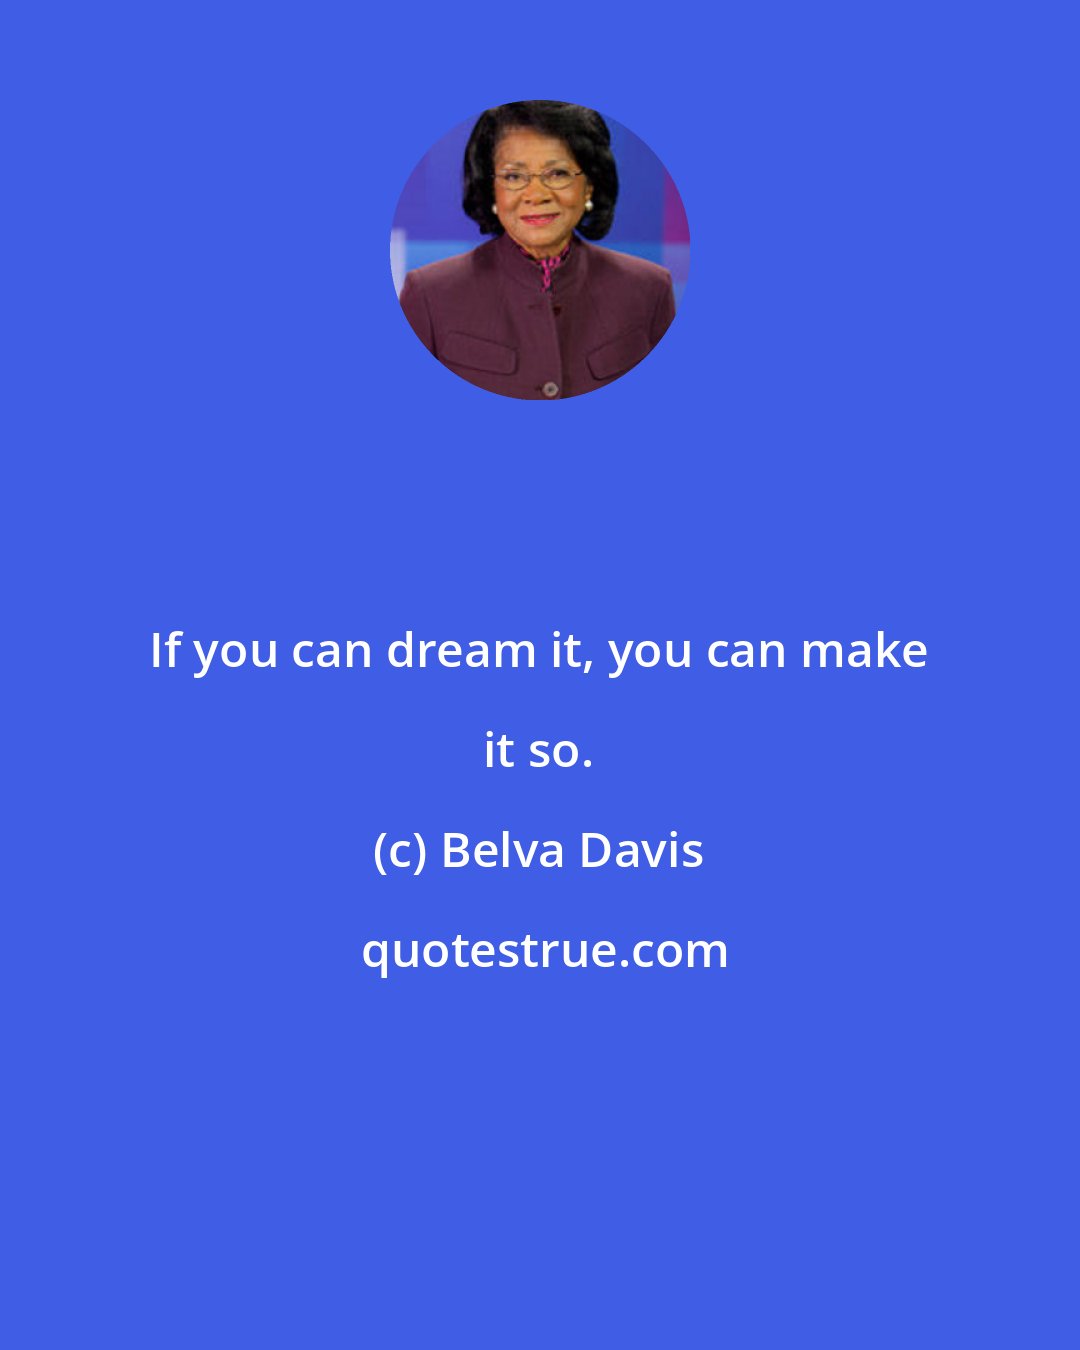 Belva Davis: If you can dream it, you can make it so.